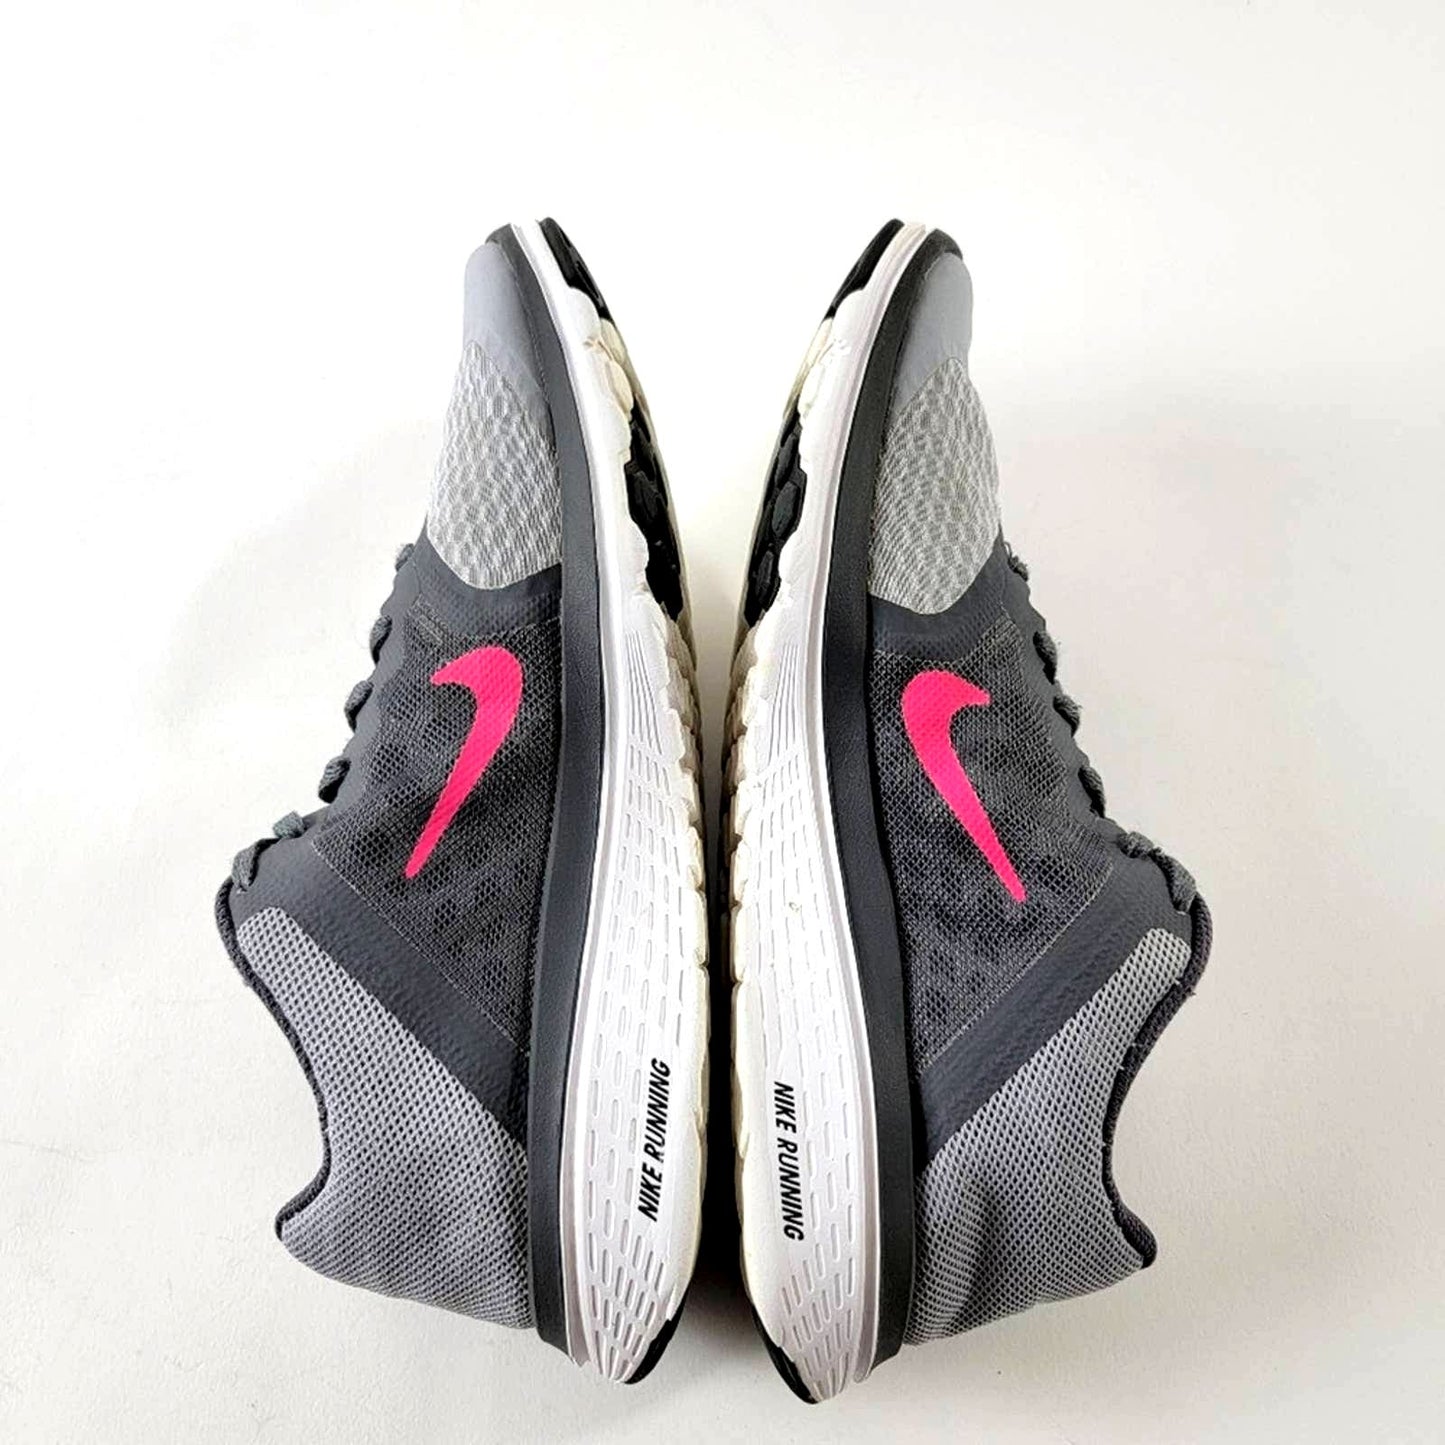 Nike FS Lite Run 3 Running Shoes - 8